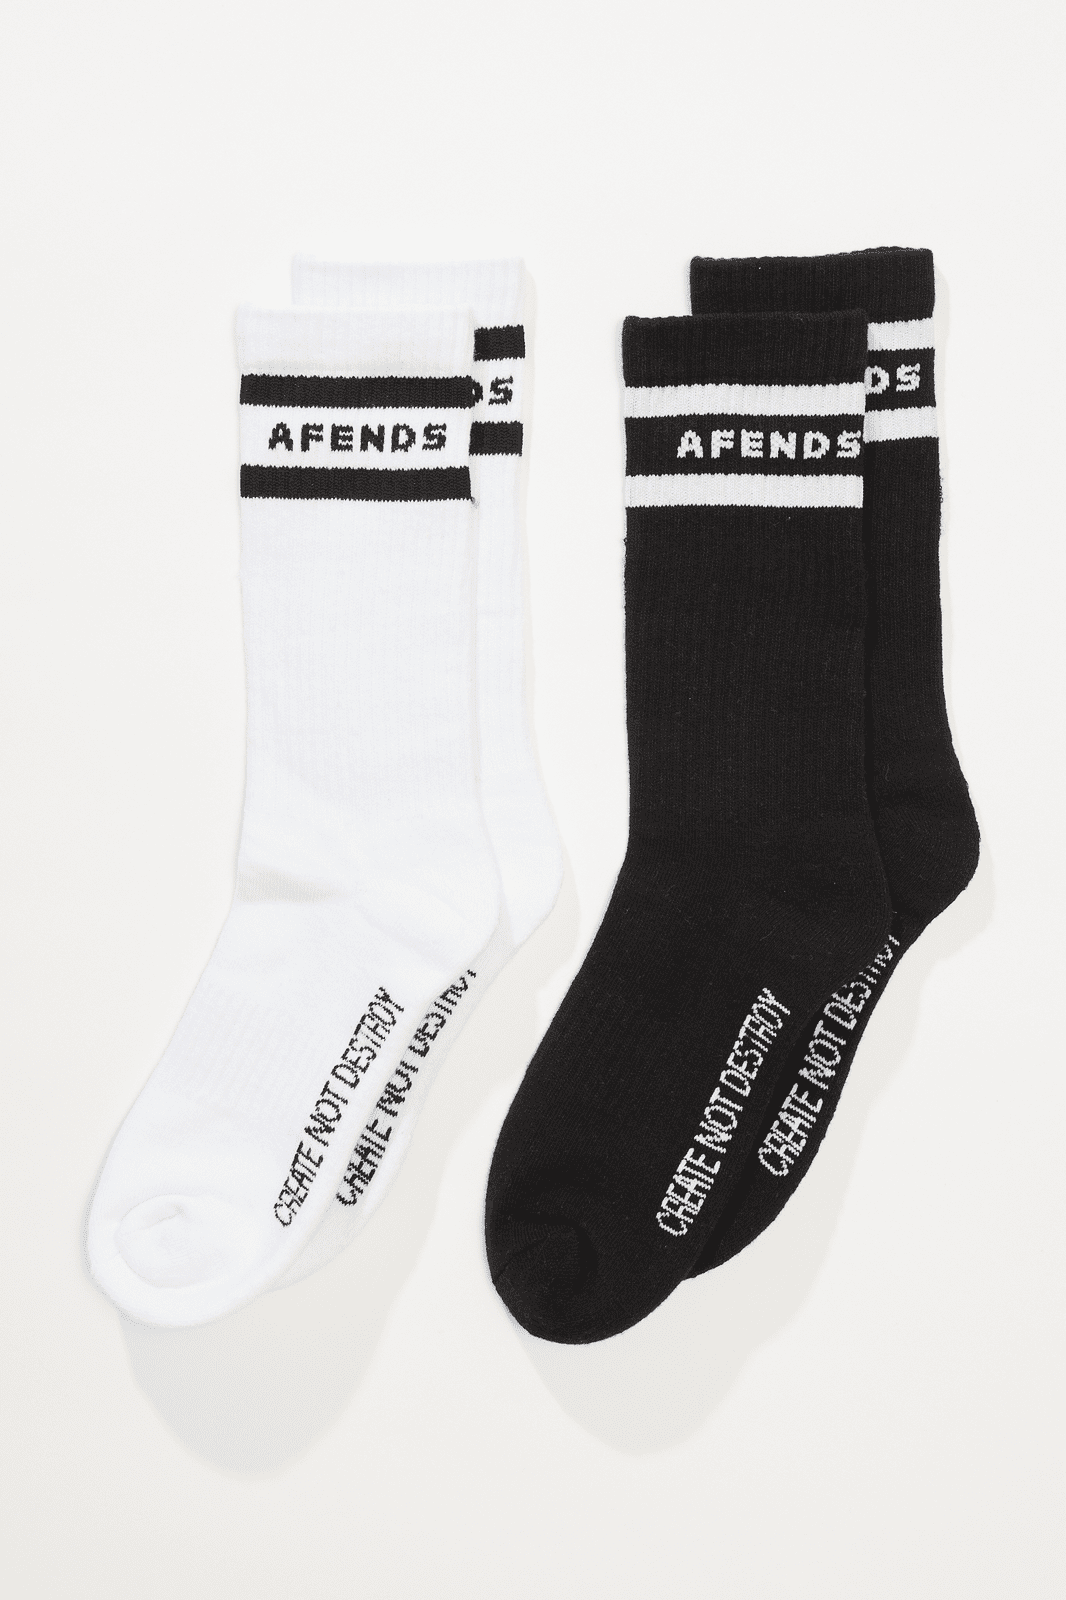 AFENDS Create not destroy socks 2 pack - Black/White